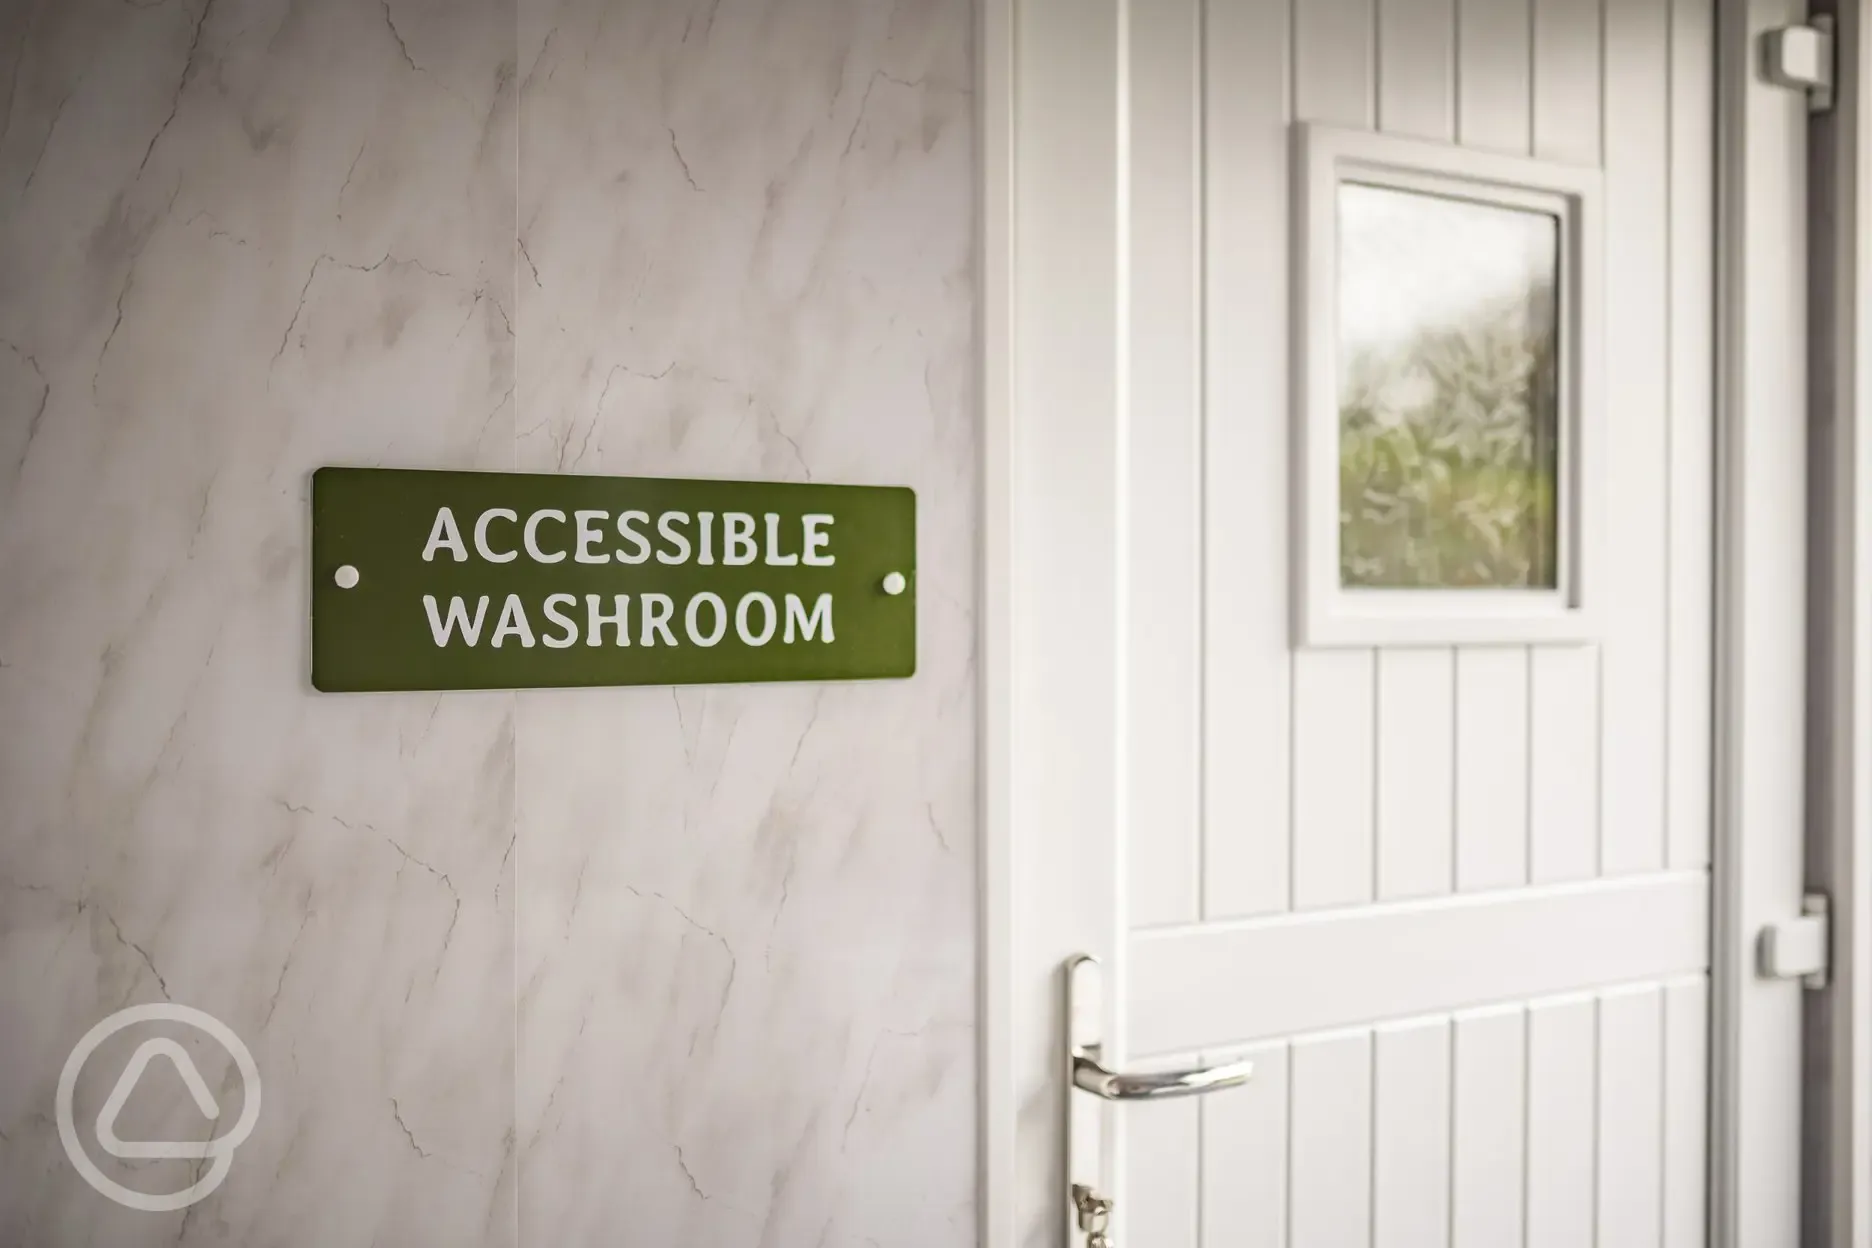 Accessible facilities